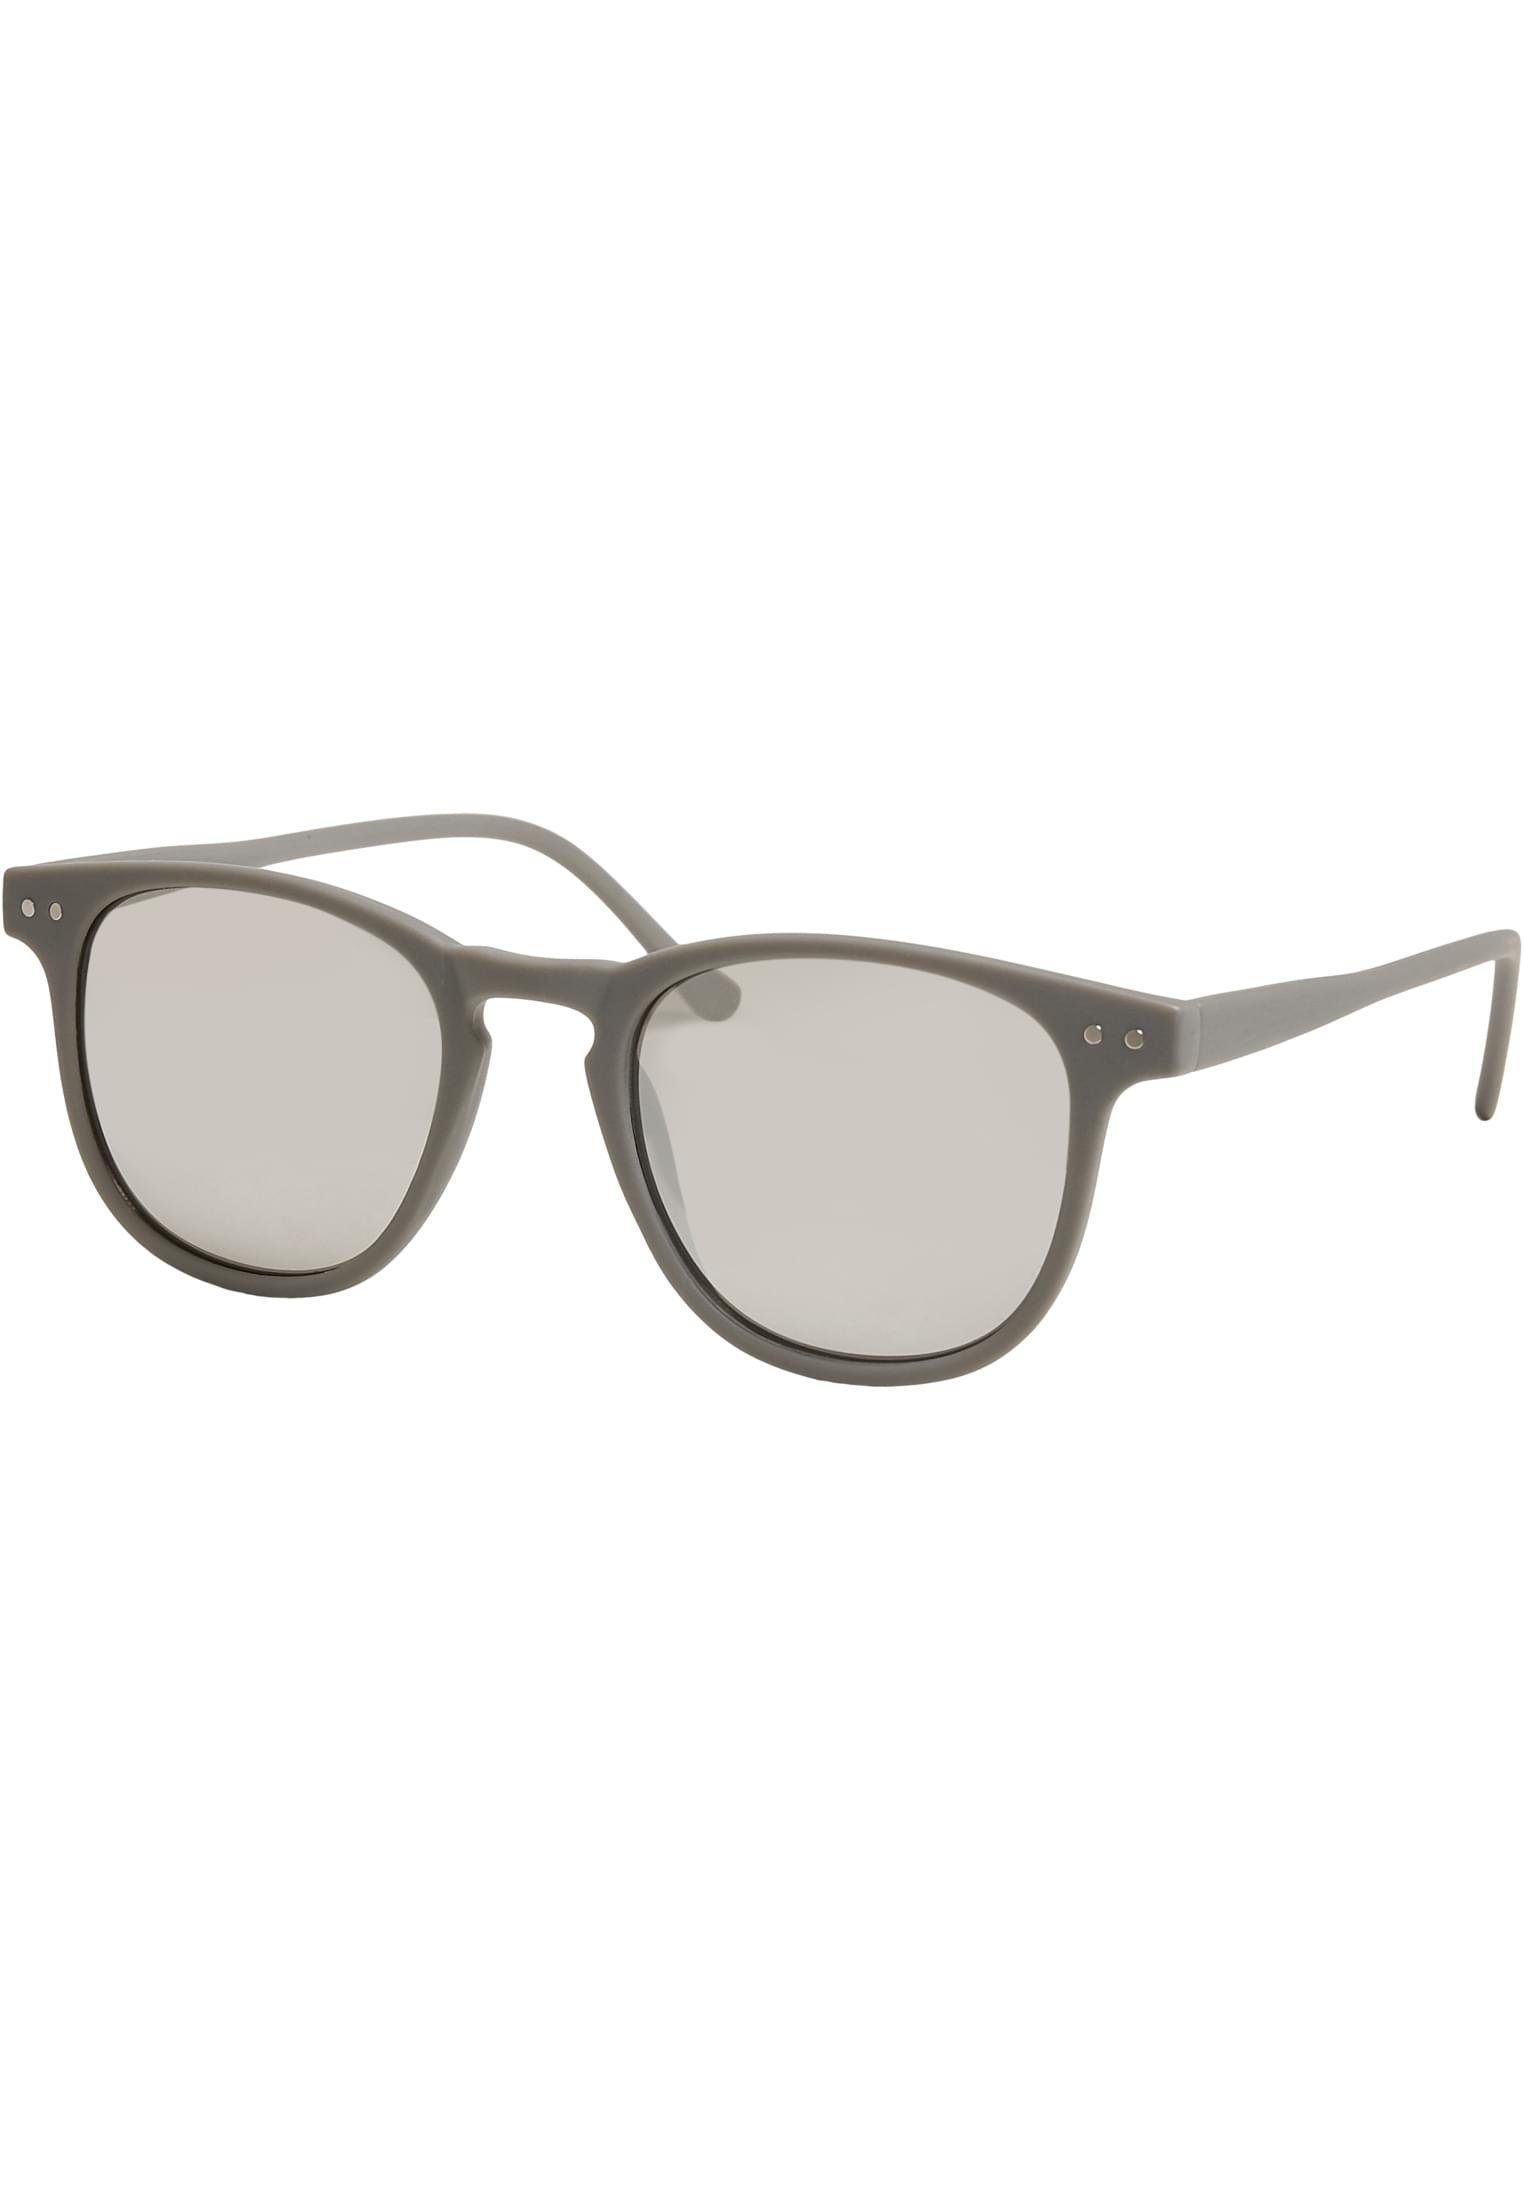 Chain Unisex with grey/silver URBAN CLASSICS Sunglasses Arthur Sonnenbrille